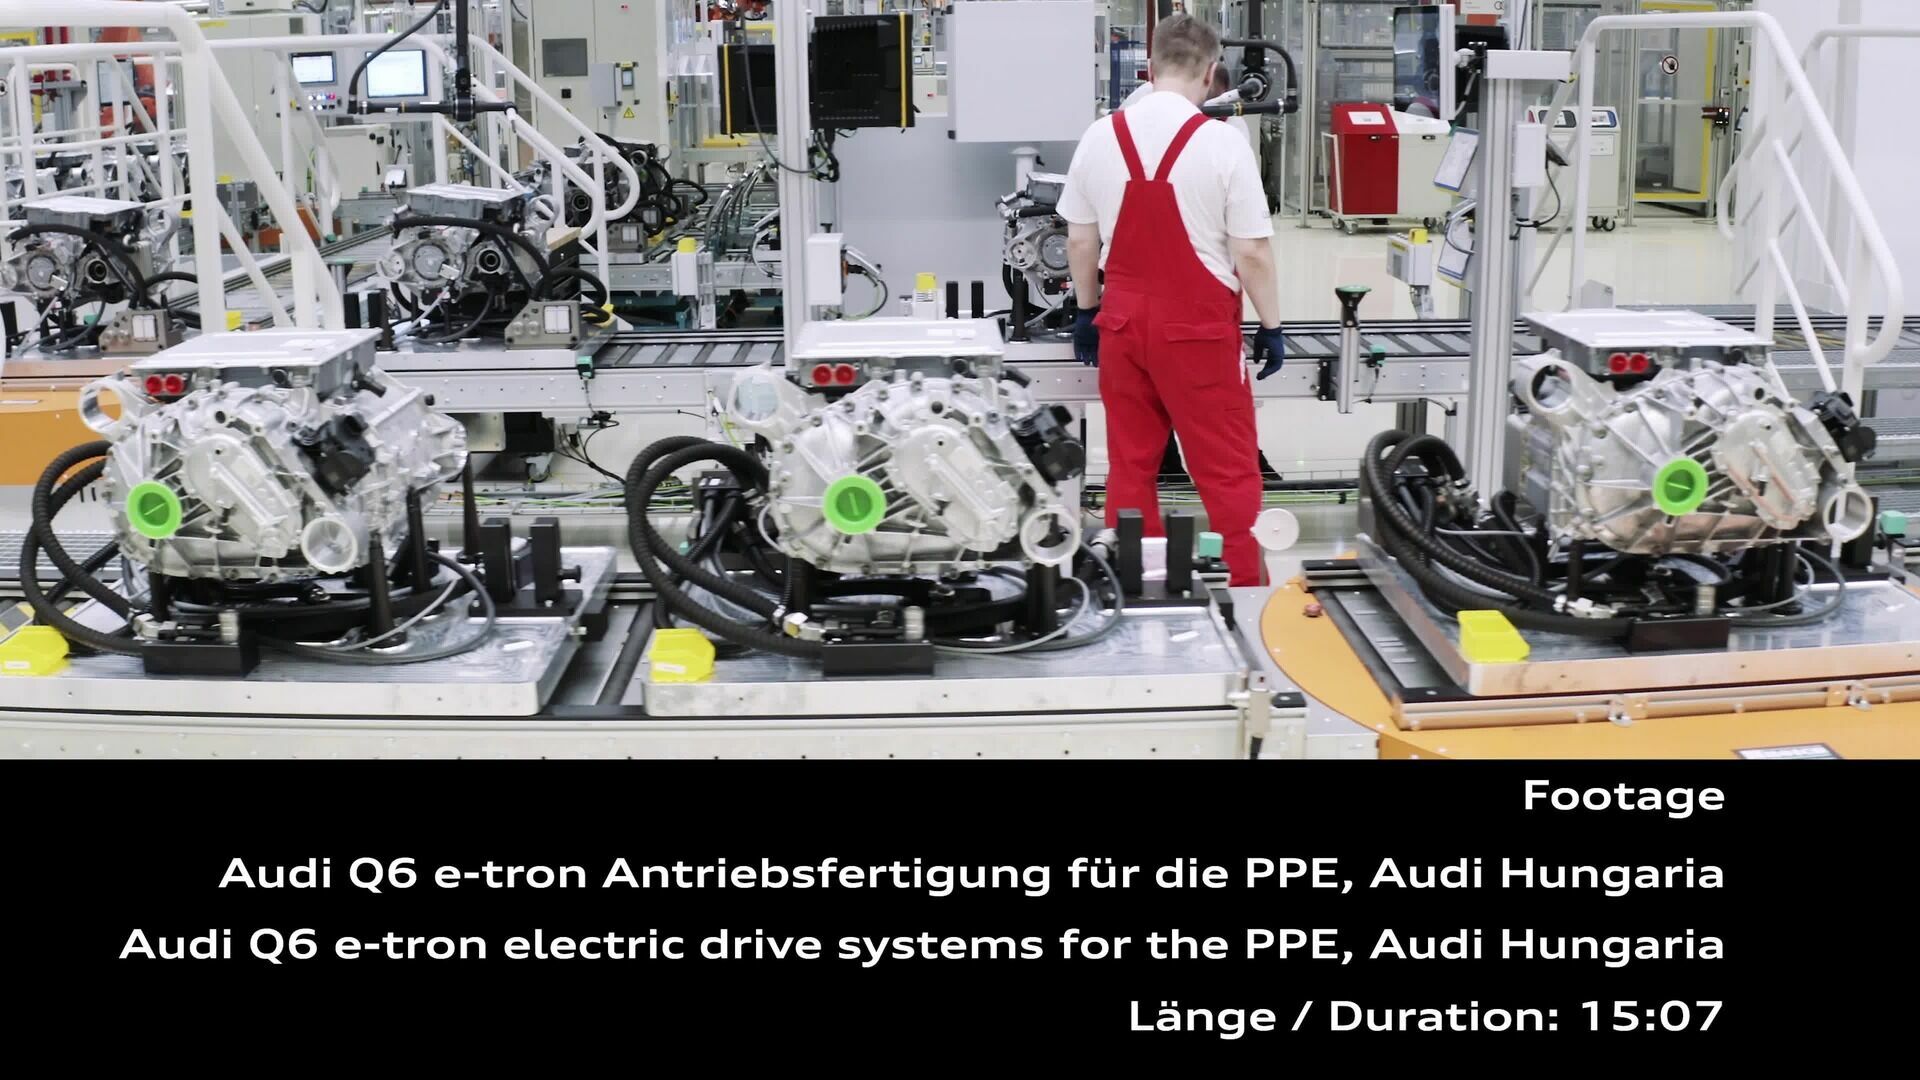 Audi Q6 e-tron Antriebsfertigung am Standort Győr – Footage